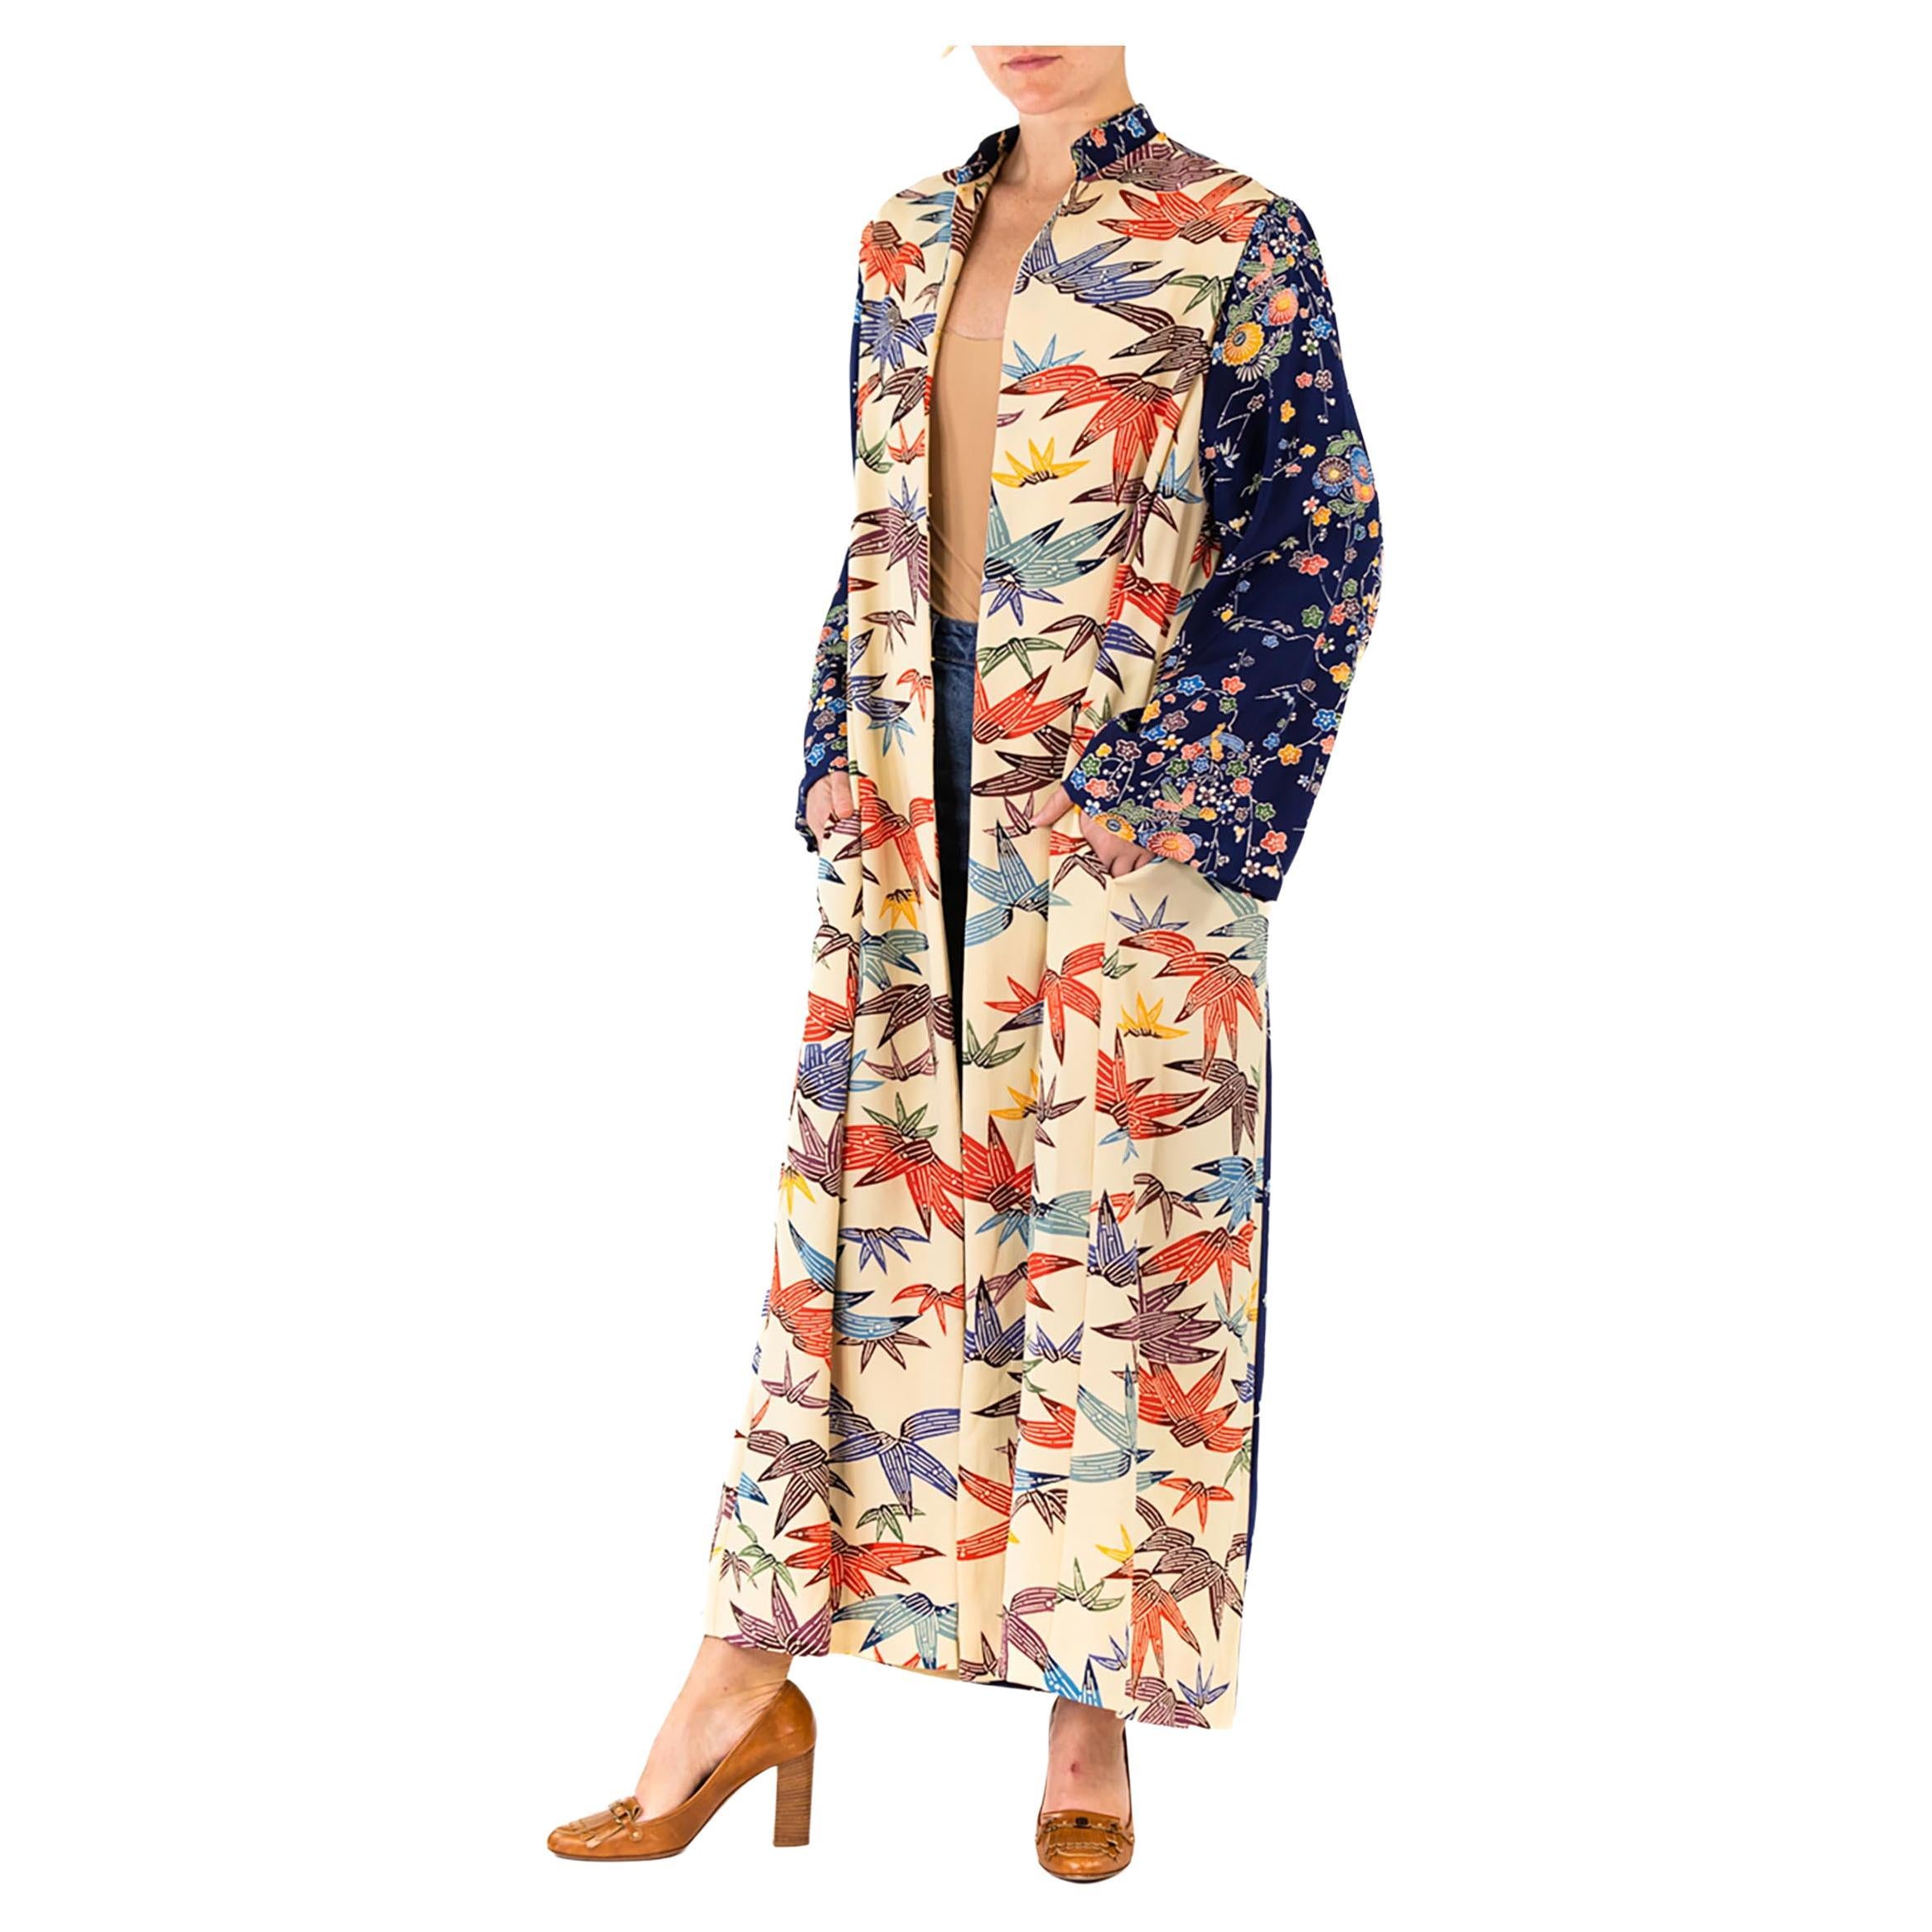 COLLECTION MORPHEW - Robe kimono multicolore en soie crème à manches bleu marine en vente